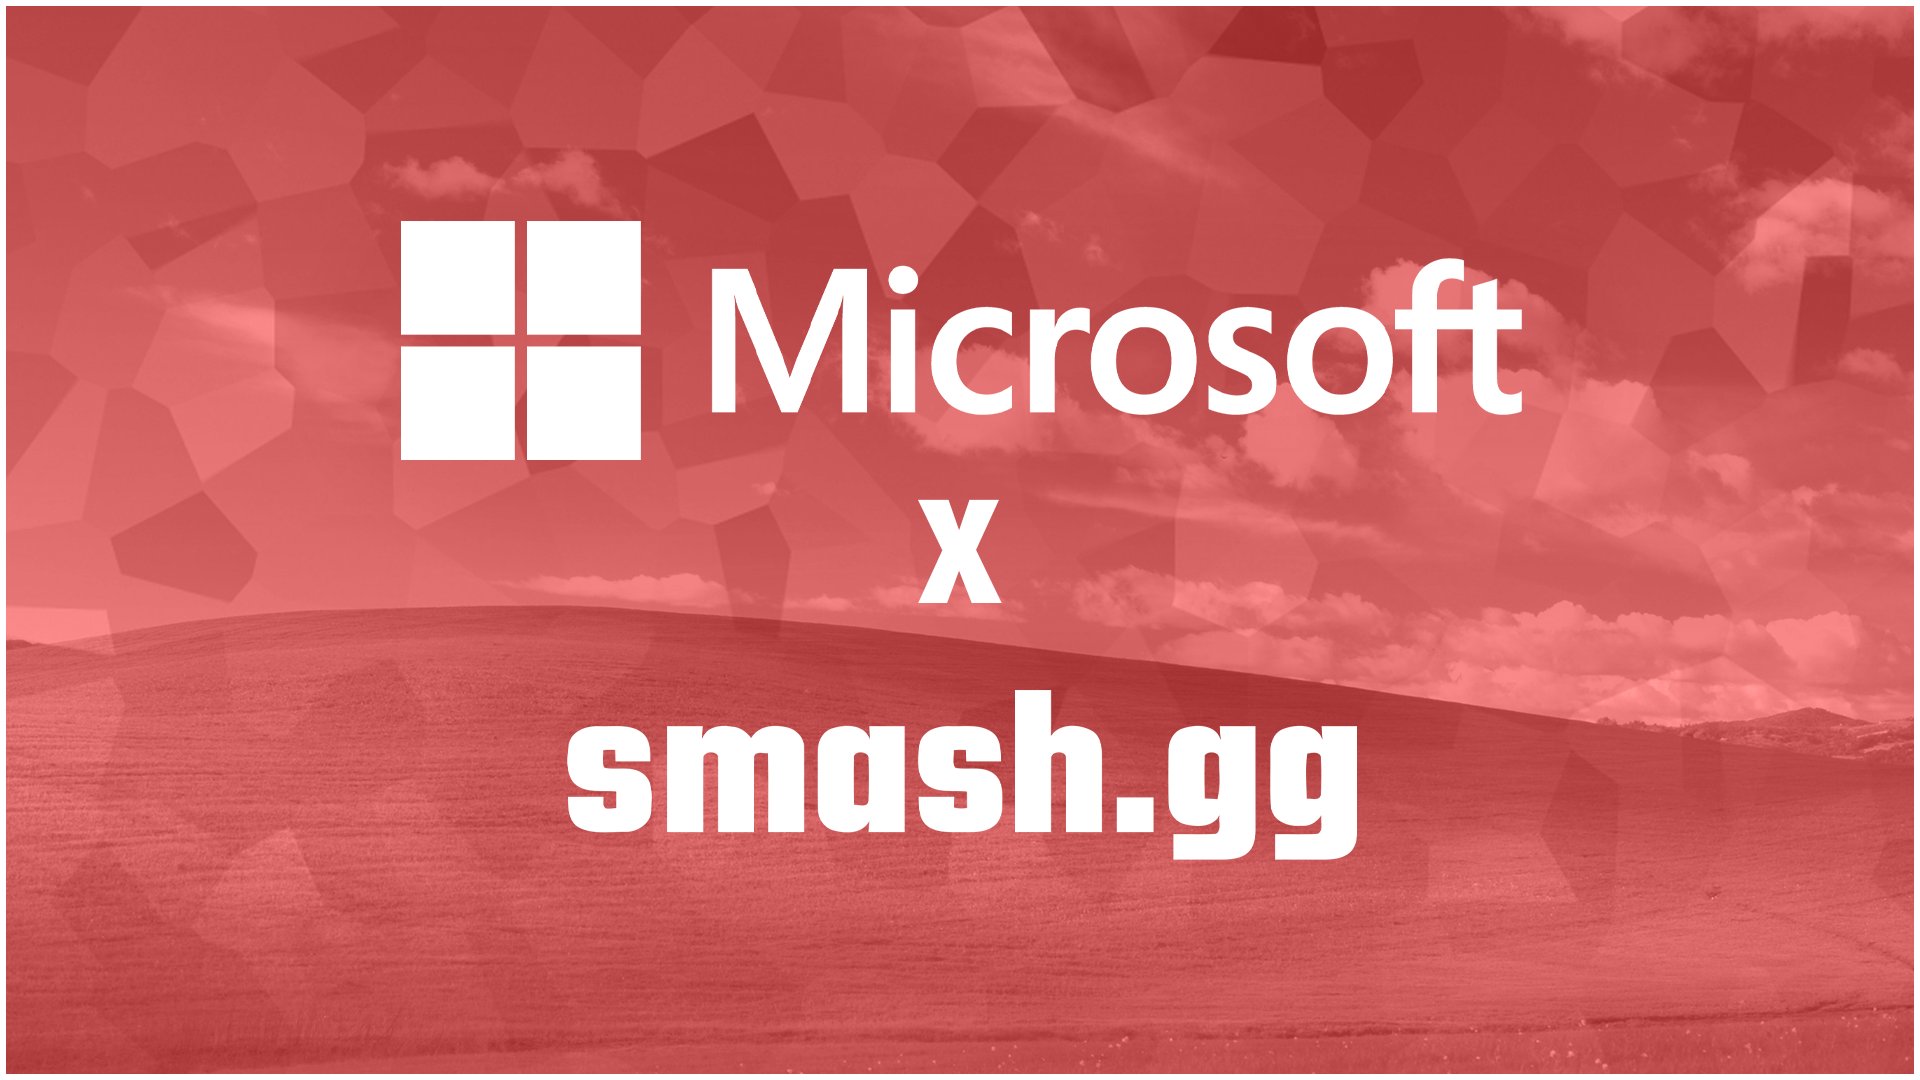 SMASH Esports (@smashesportsgg) / X